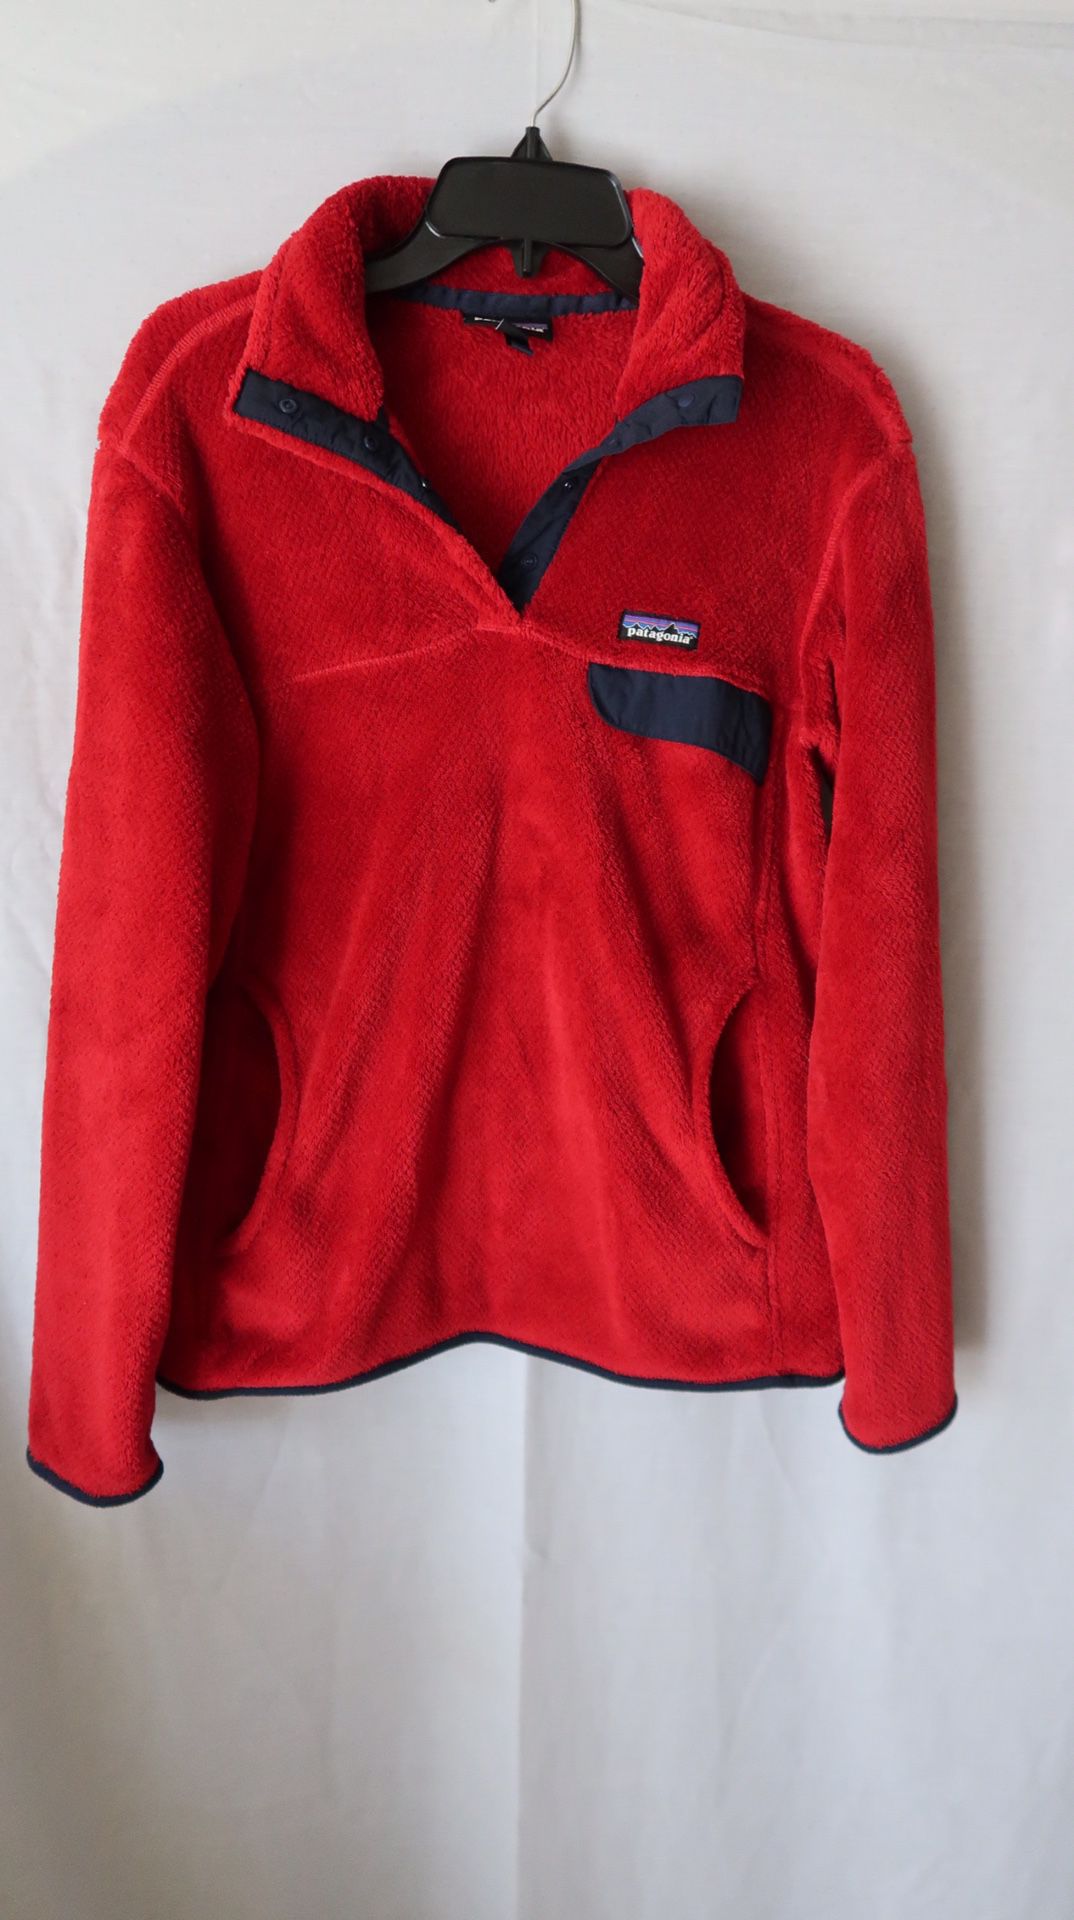 Patagonia red sherpa style sweatshirt - Size L